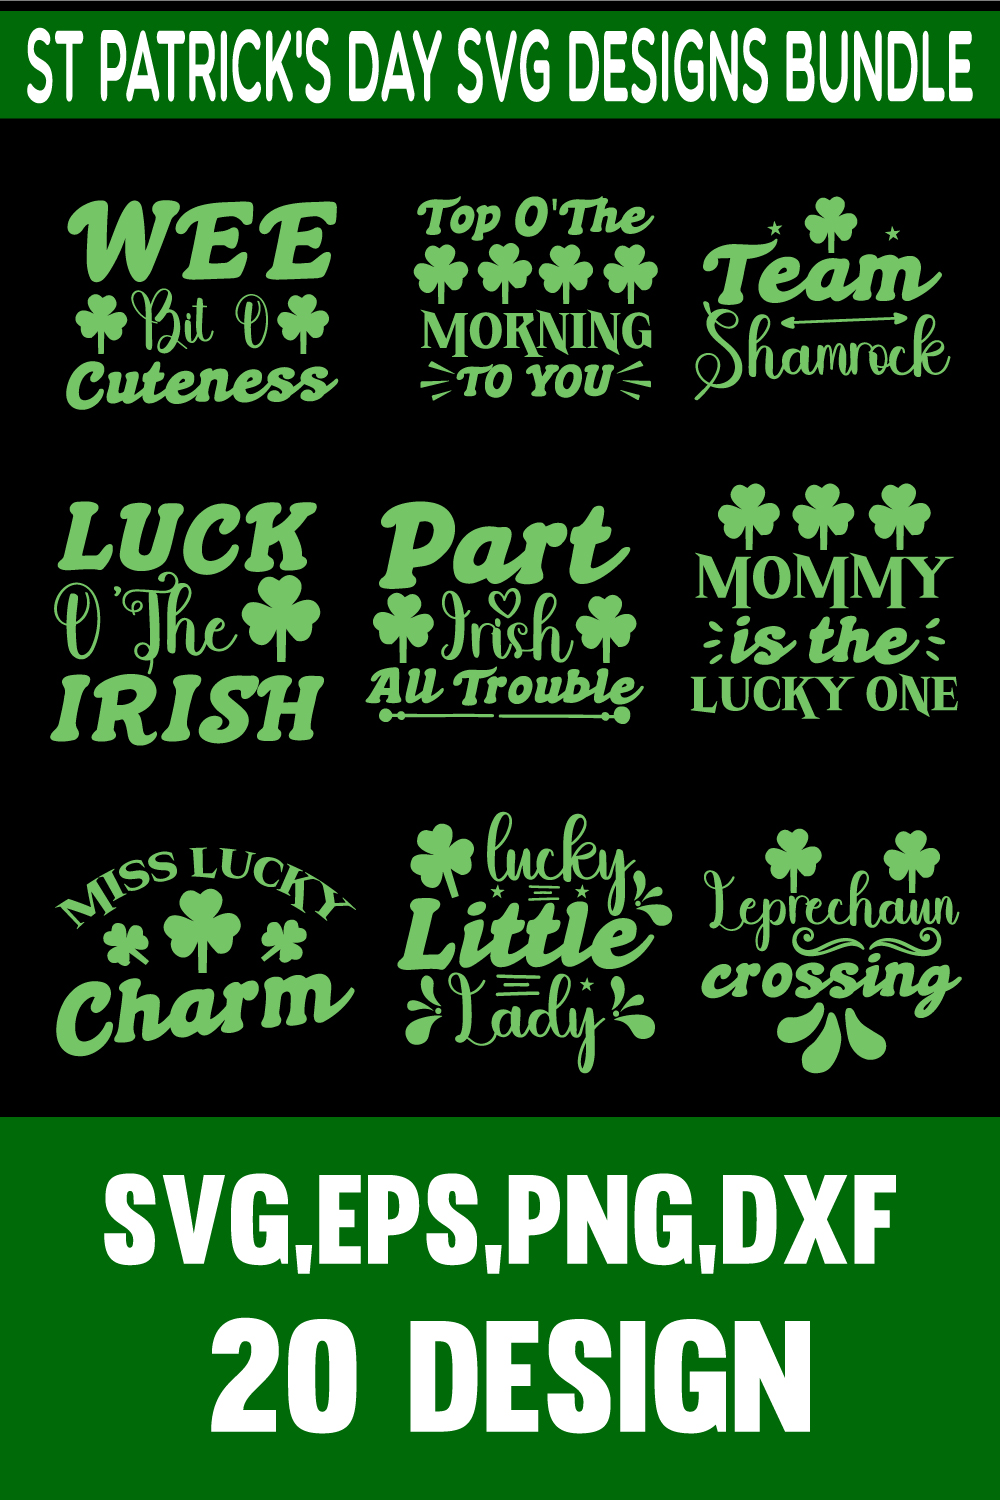 20 St Patrick\'s day SVG bundle pinterest preview image.